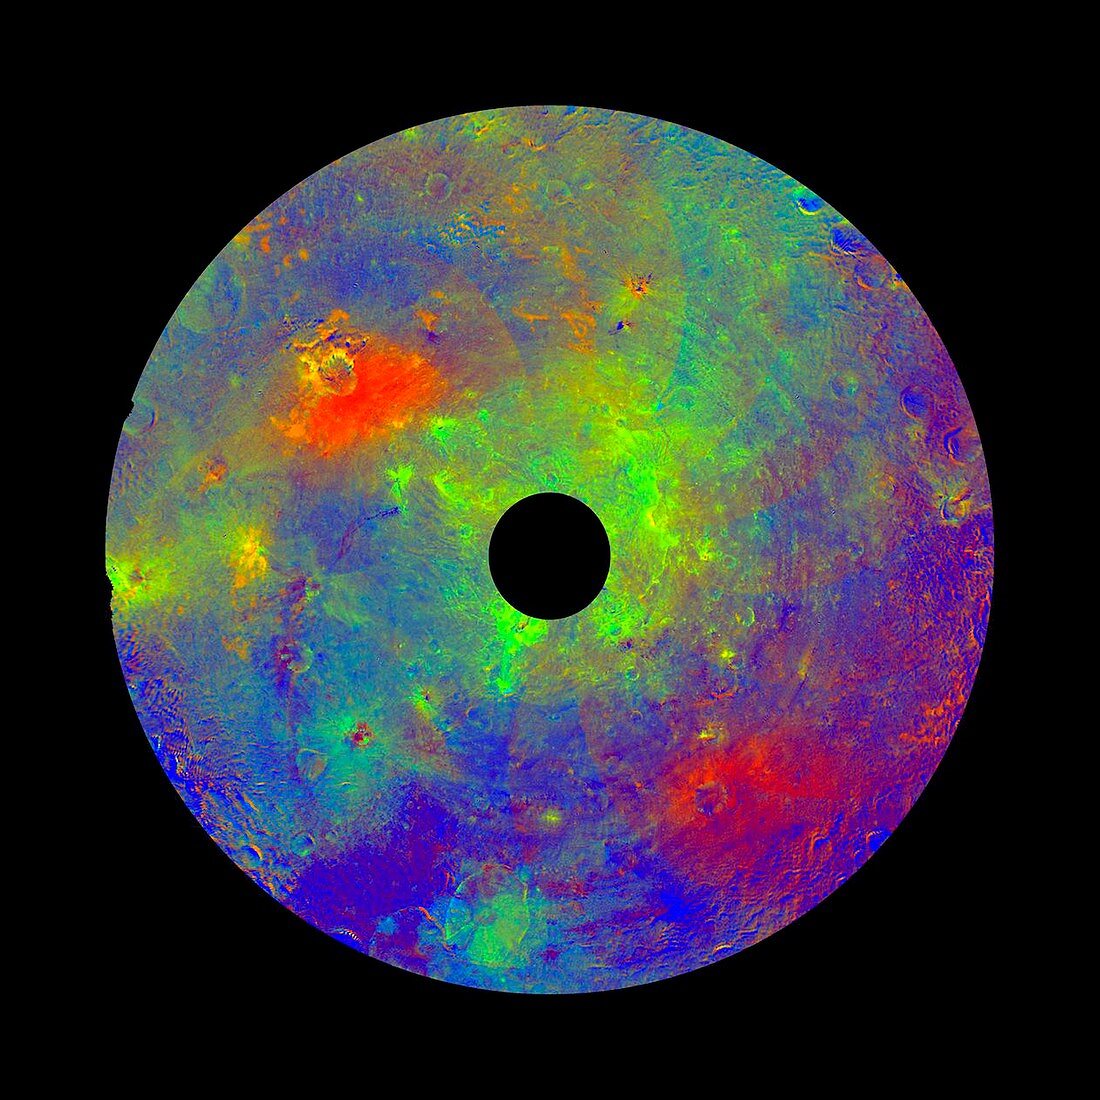 Vesta asteroid,geologic map